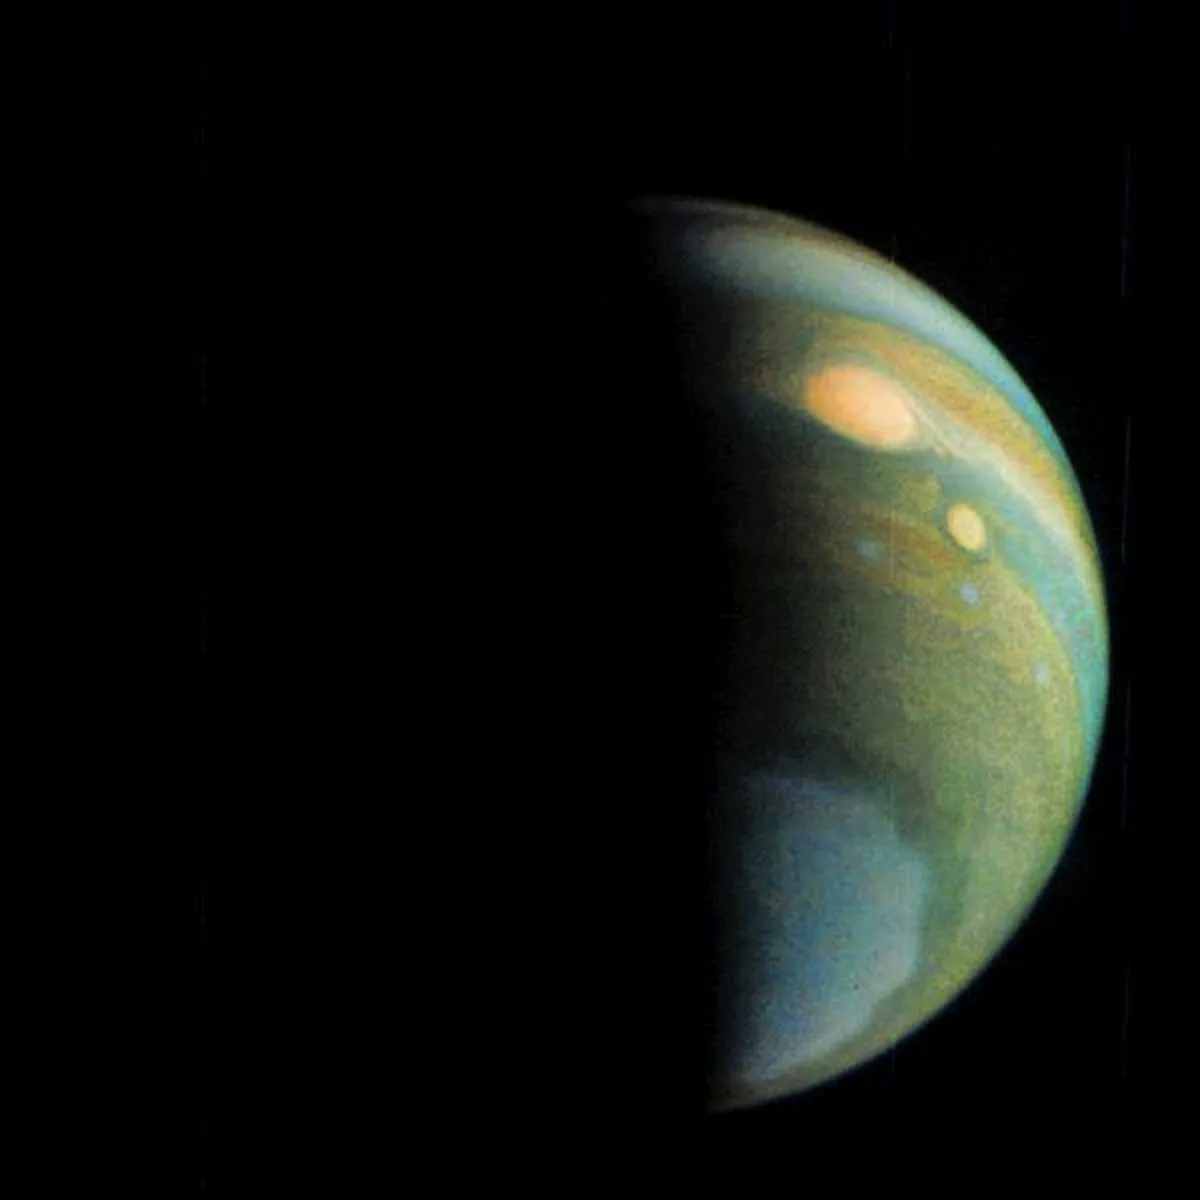 Jupiter in false colour © NASA/JPL-Caltech/SwRI/MSSS/Gerald Eichstaedt